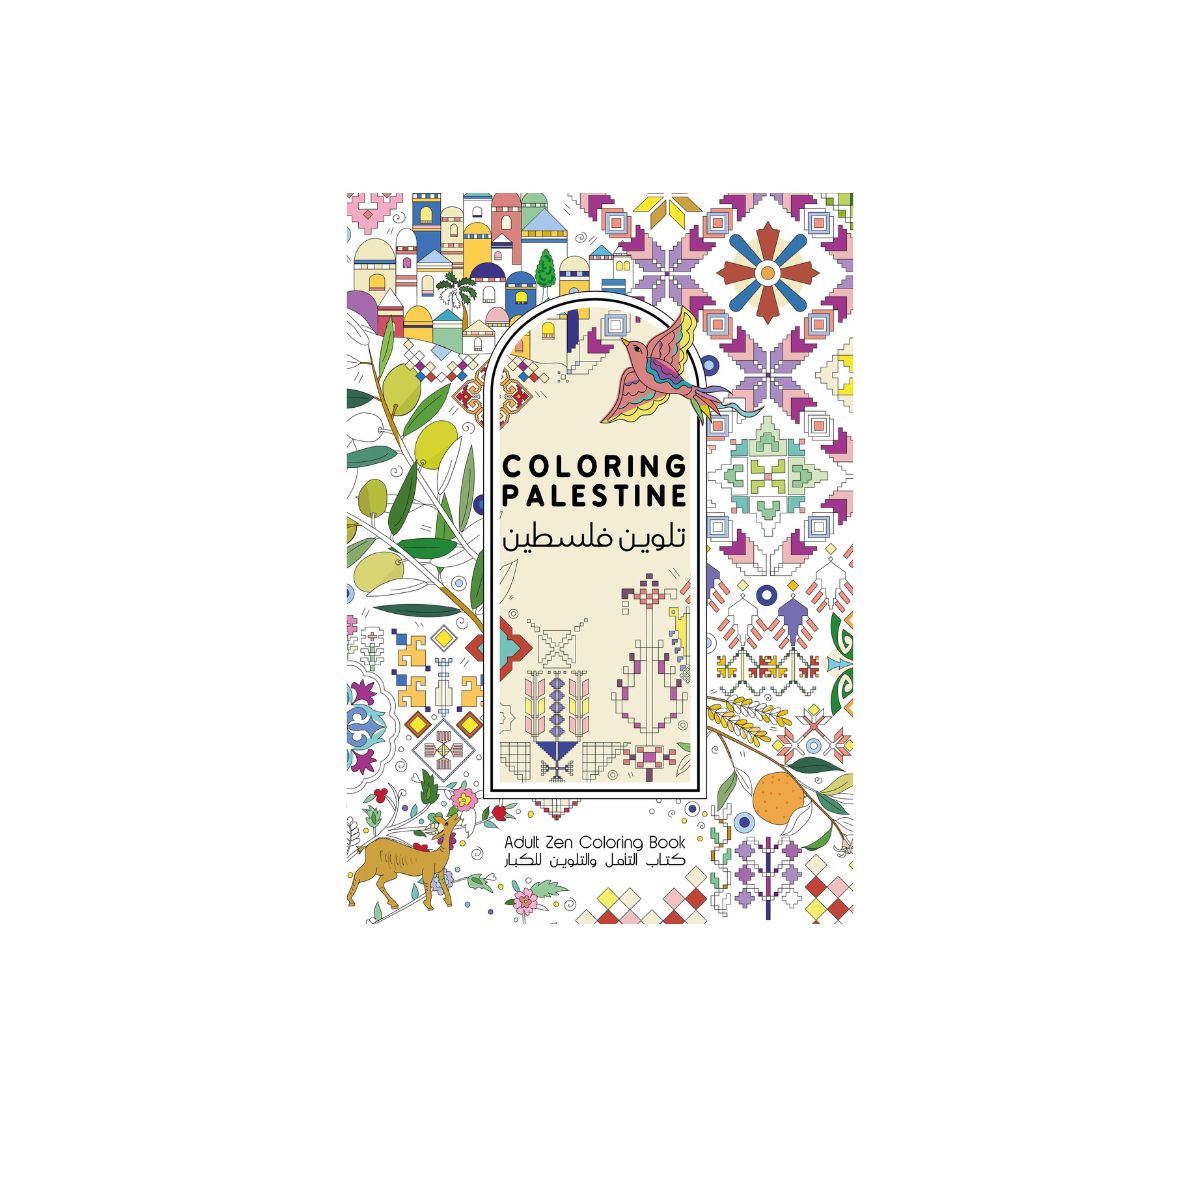 Coloring Palestine: Adult Zen Coloring Book